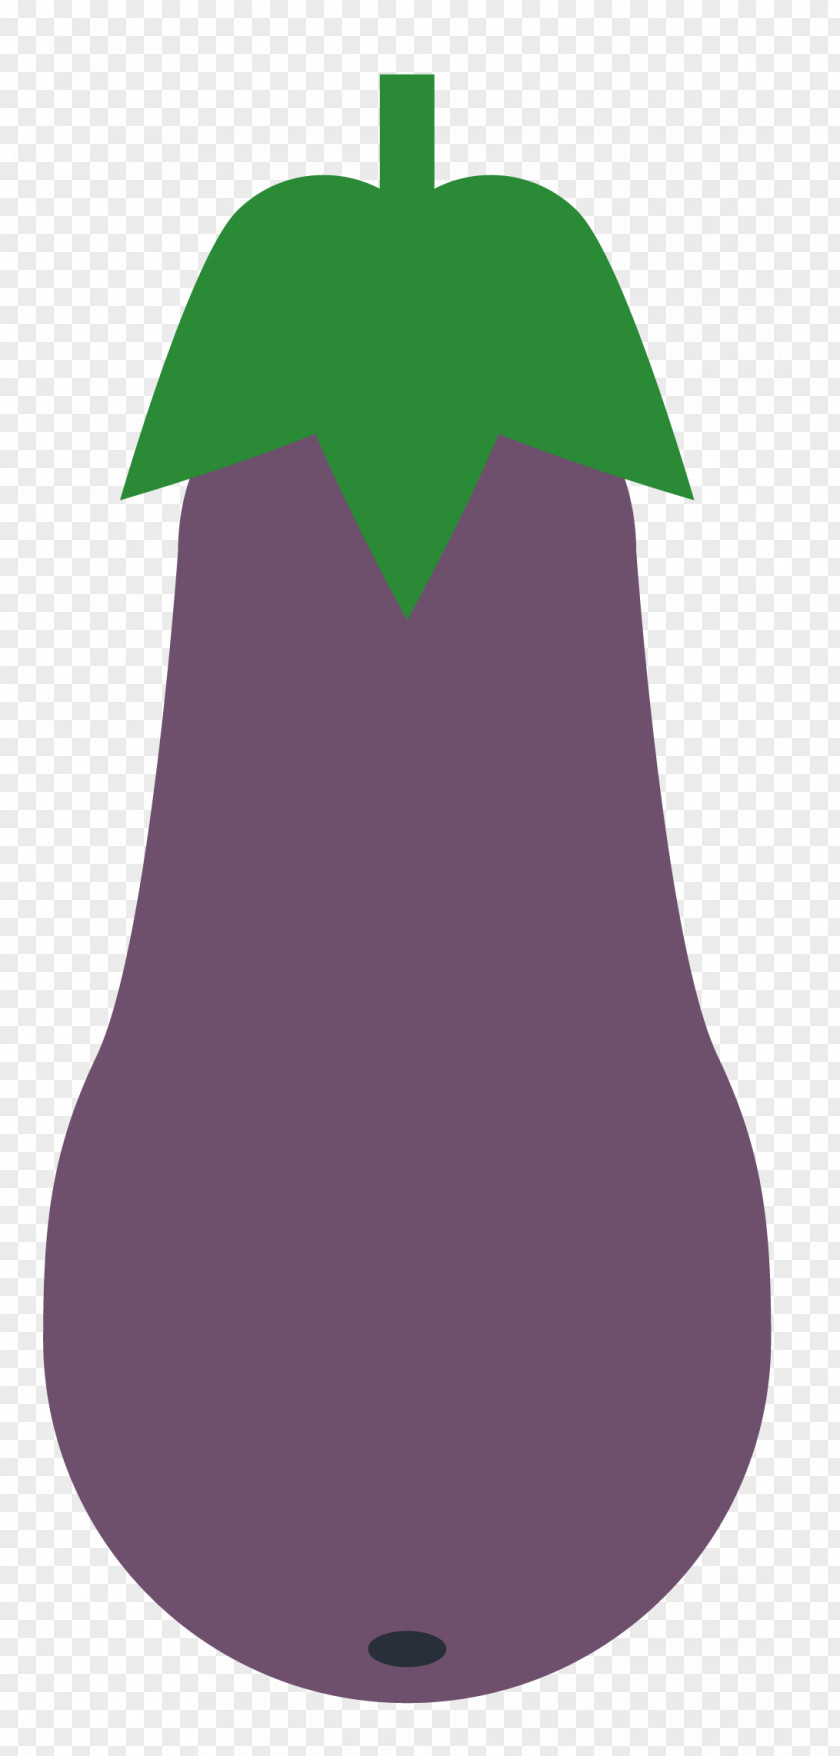 Vector Eggplant Cartoon Plant Illustration PNG